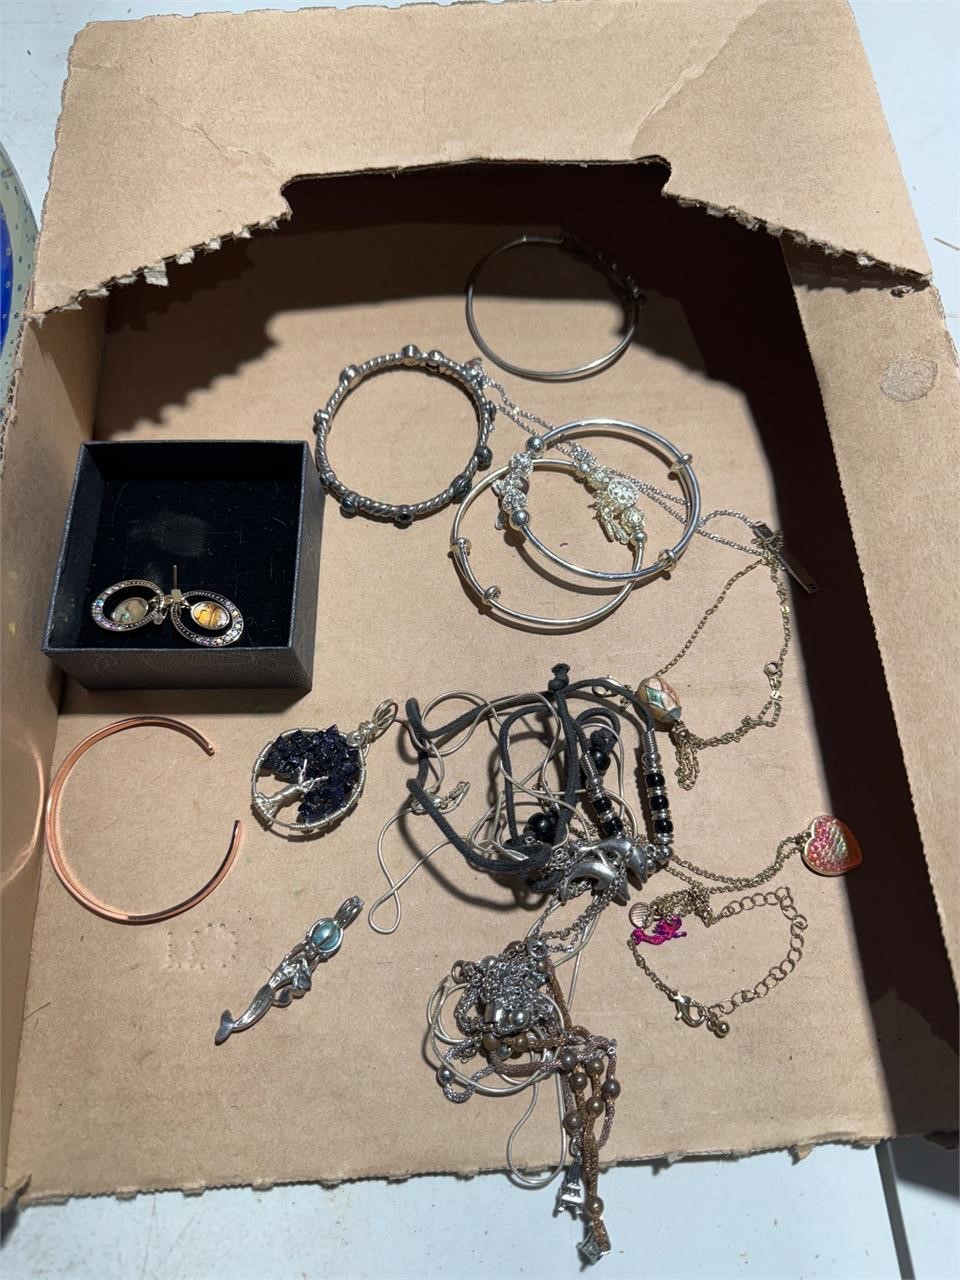 Jewelry contents